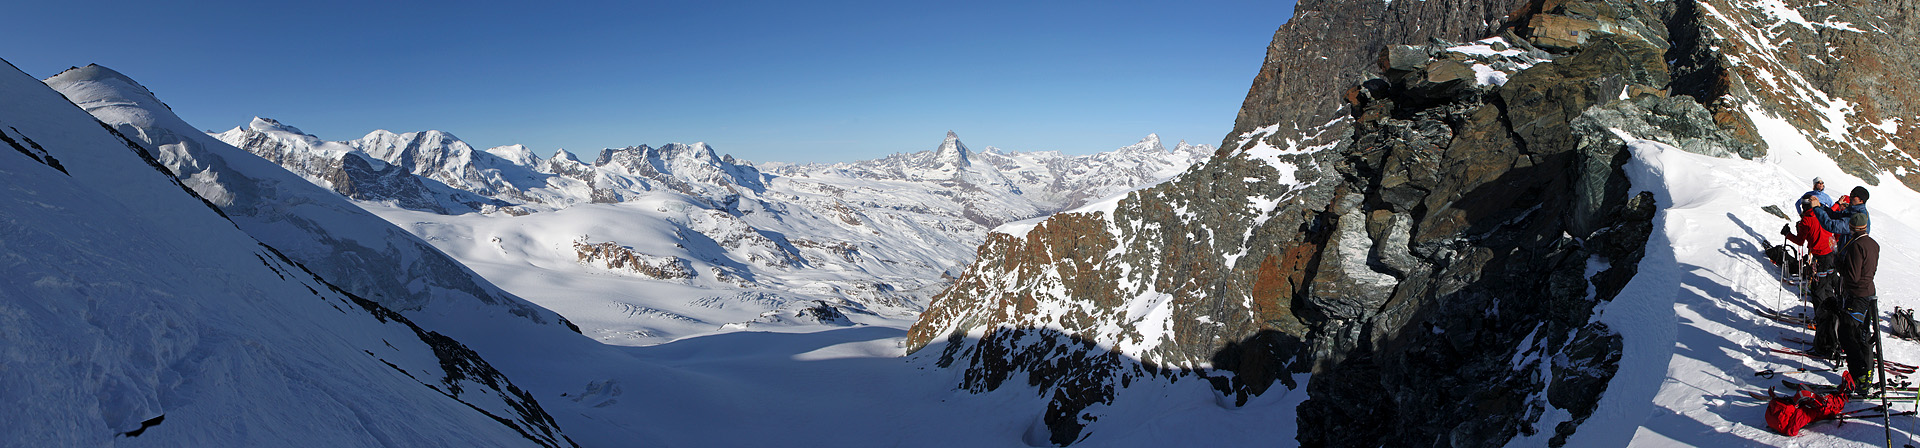 View from Adlerpass (3789), Switzerland